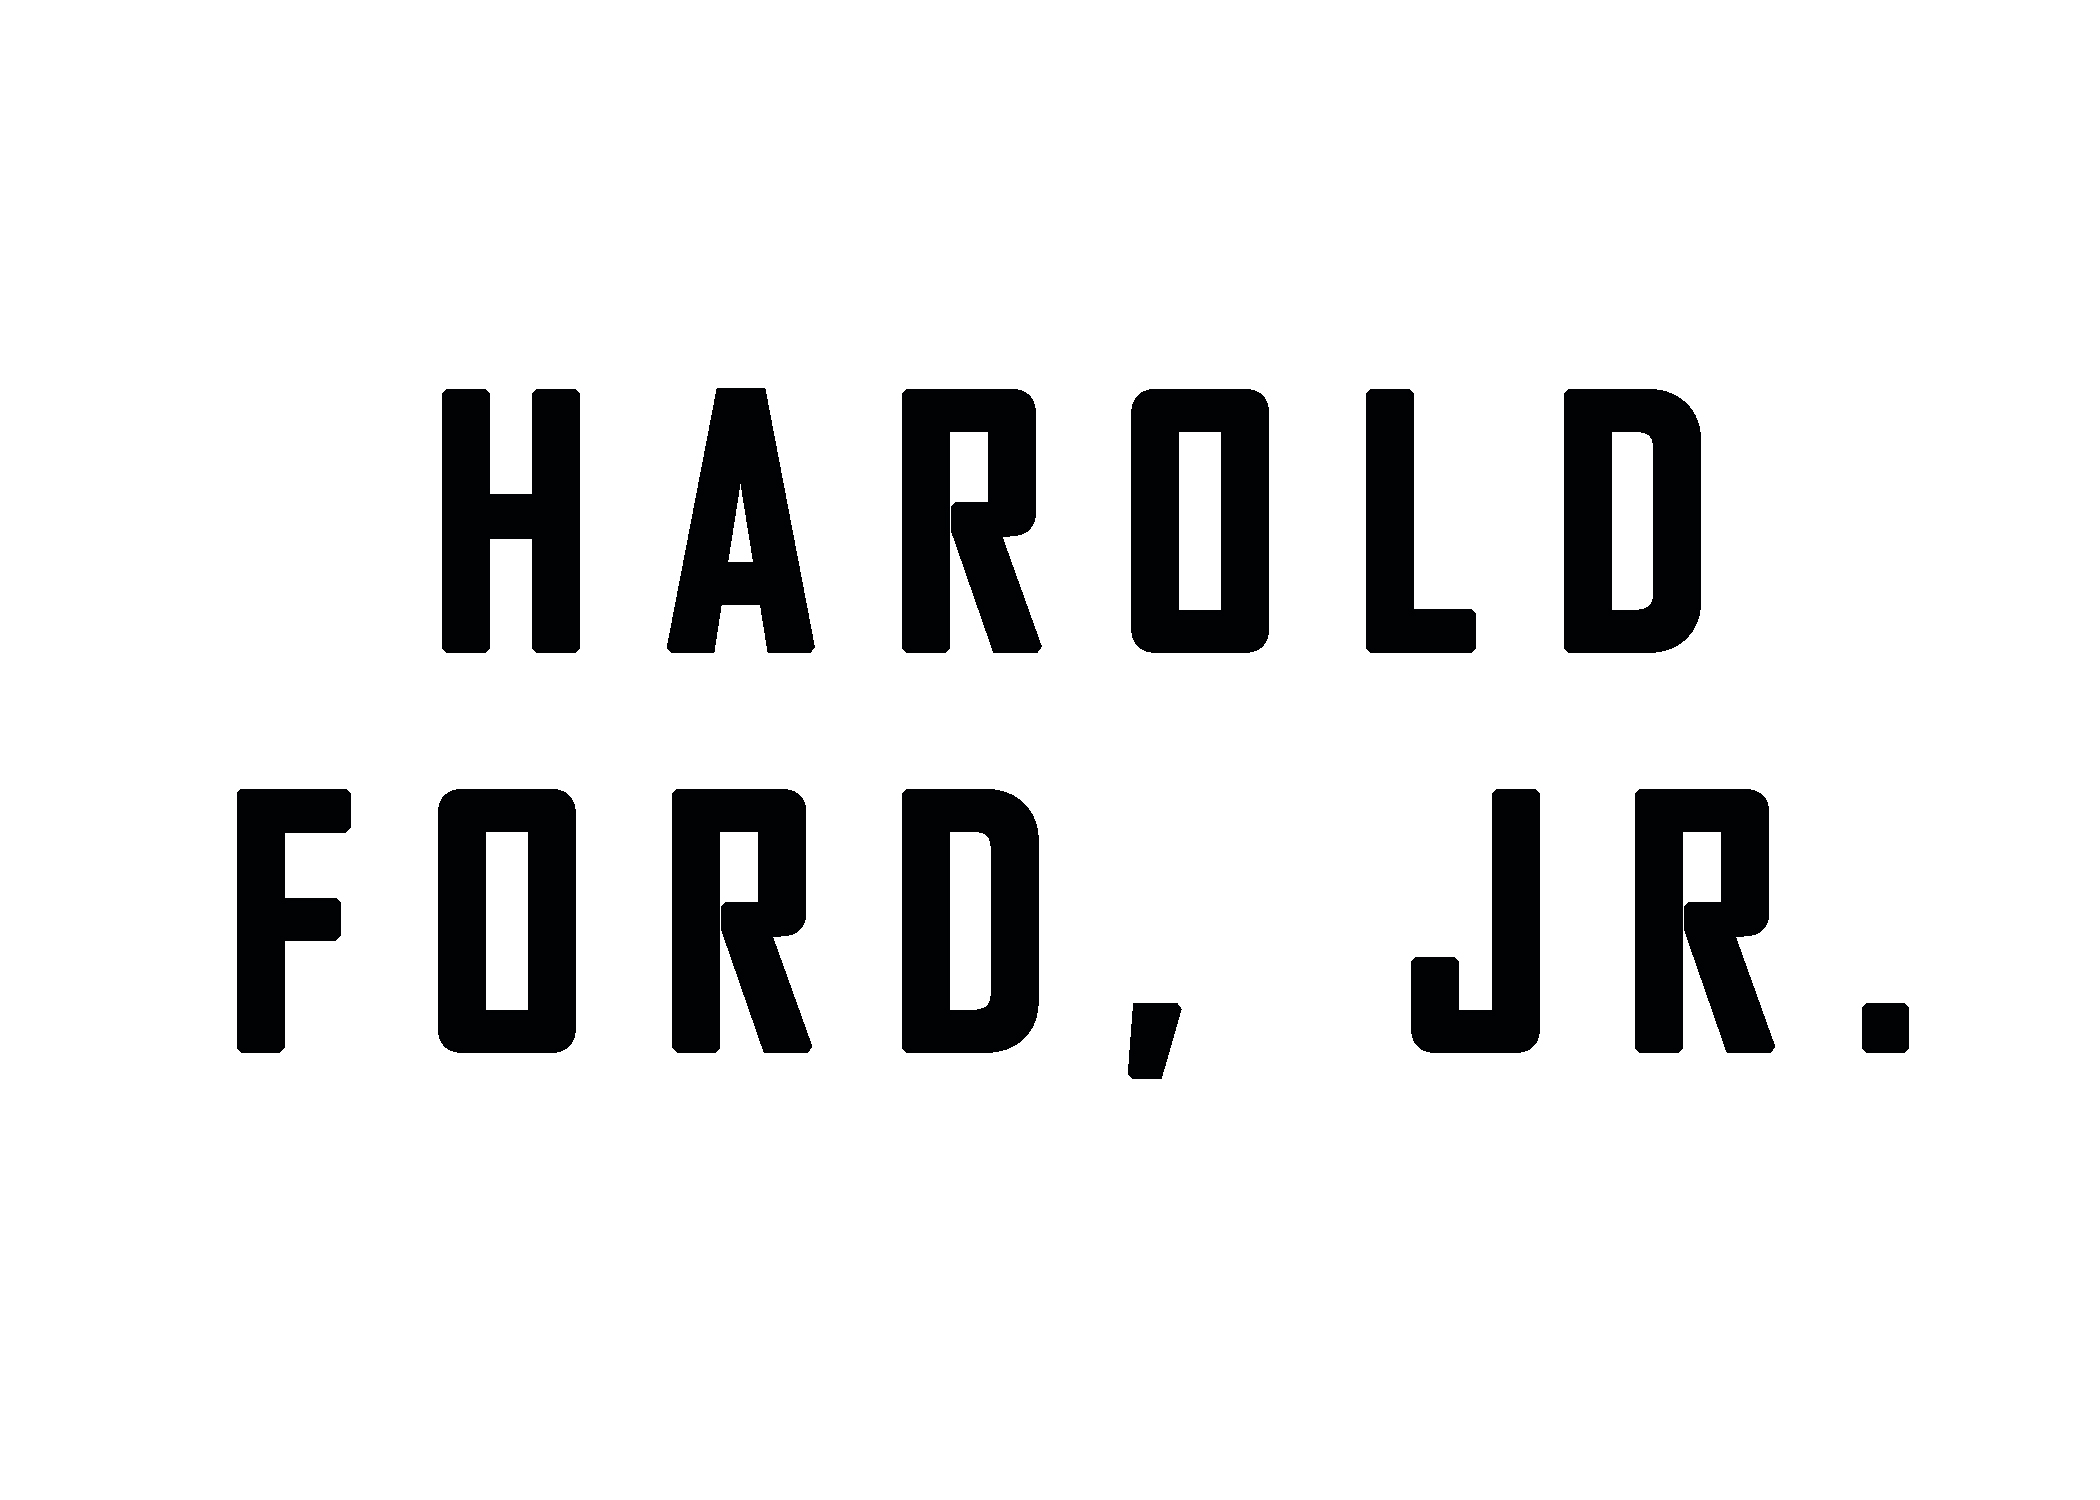 Harold Ford Jr